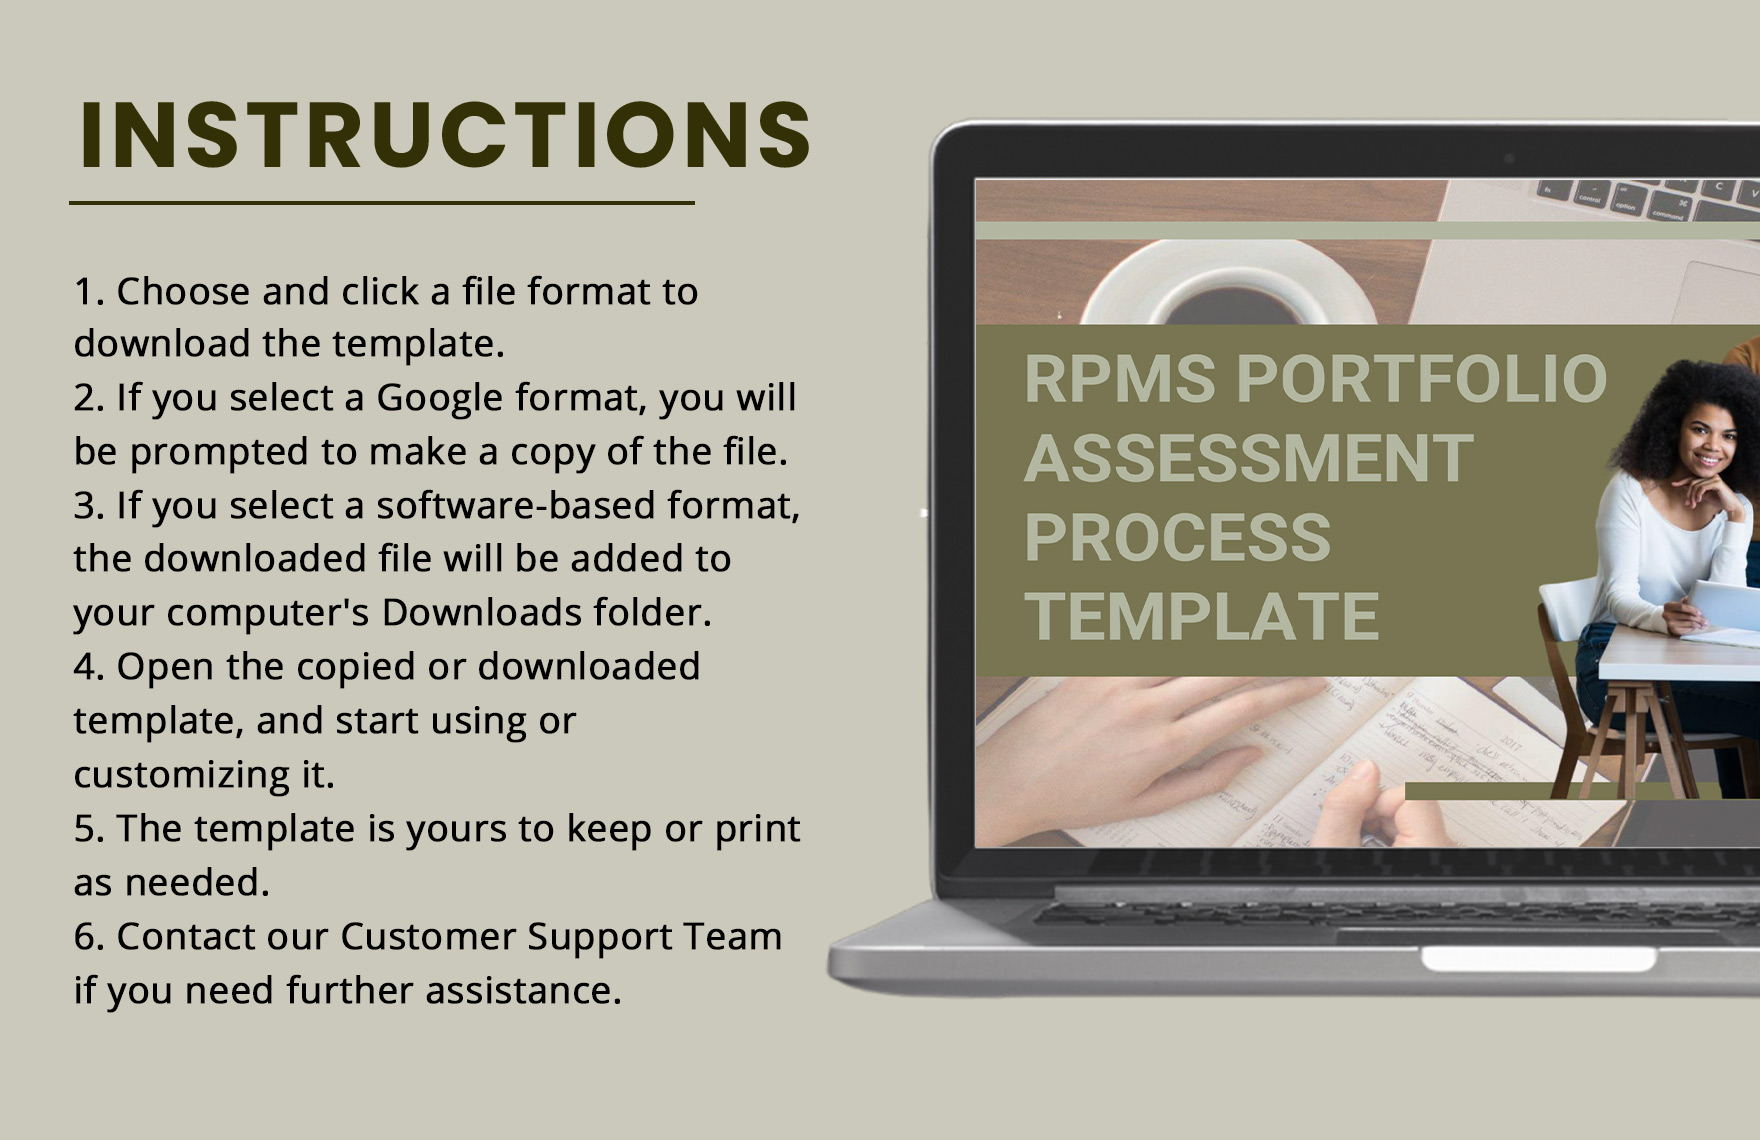 RPMS Portfolio Assessment Process Template